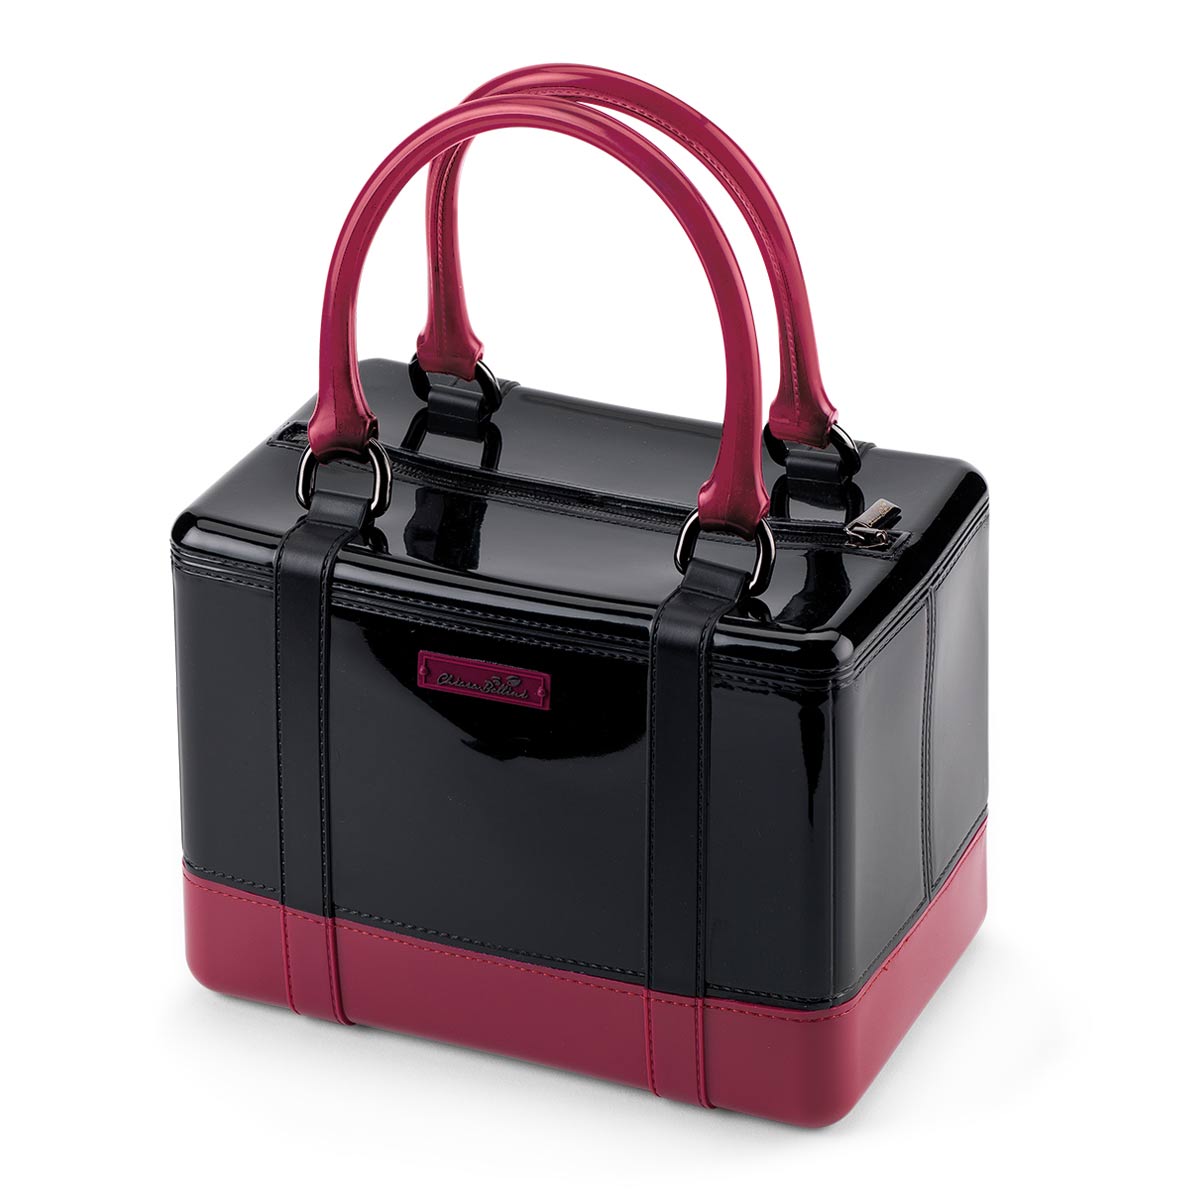 Satchel handbag in solid coloured bright PVC